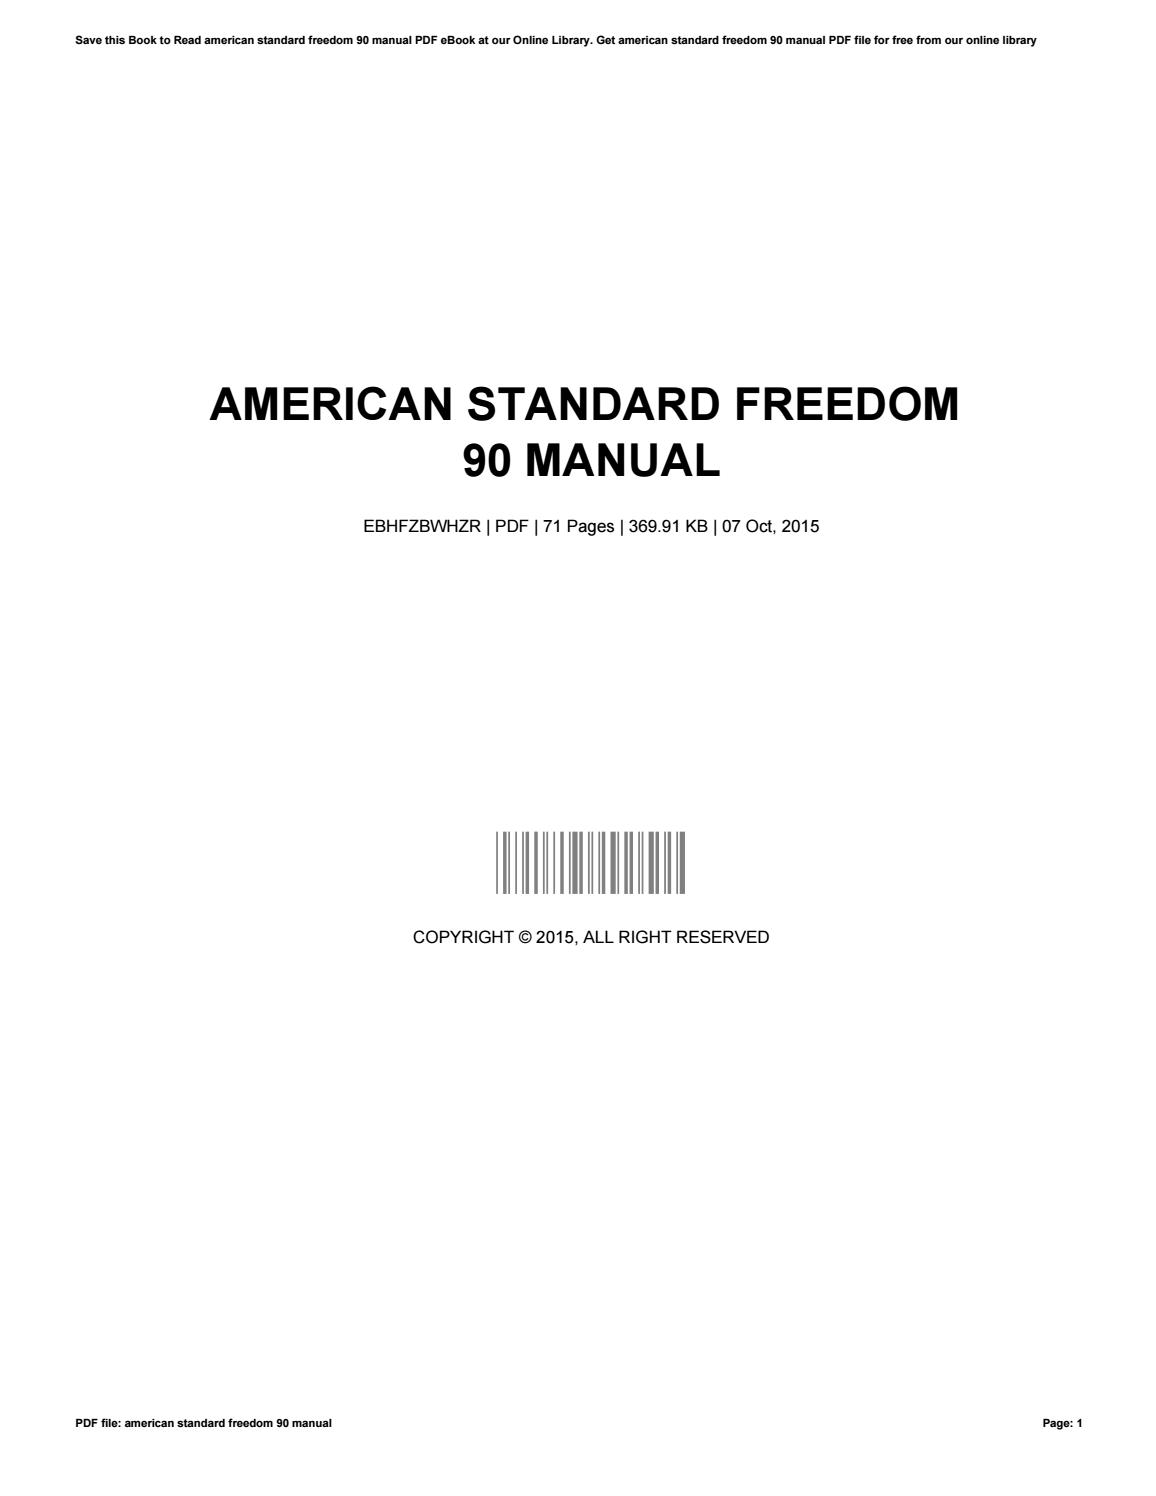 American standard freedom 90 user manual free